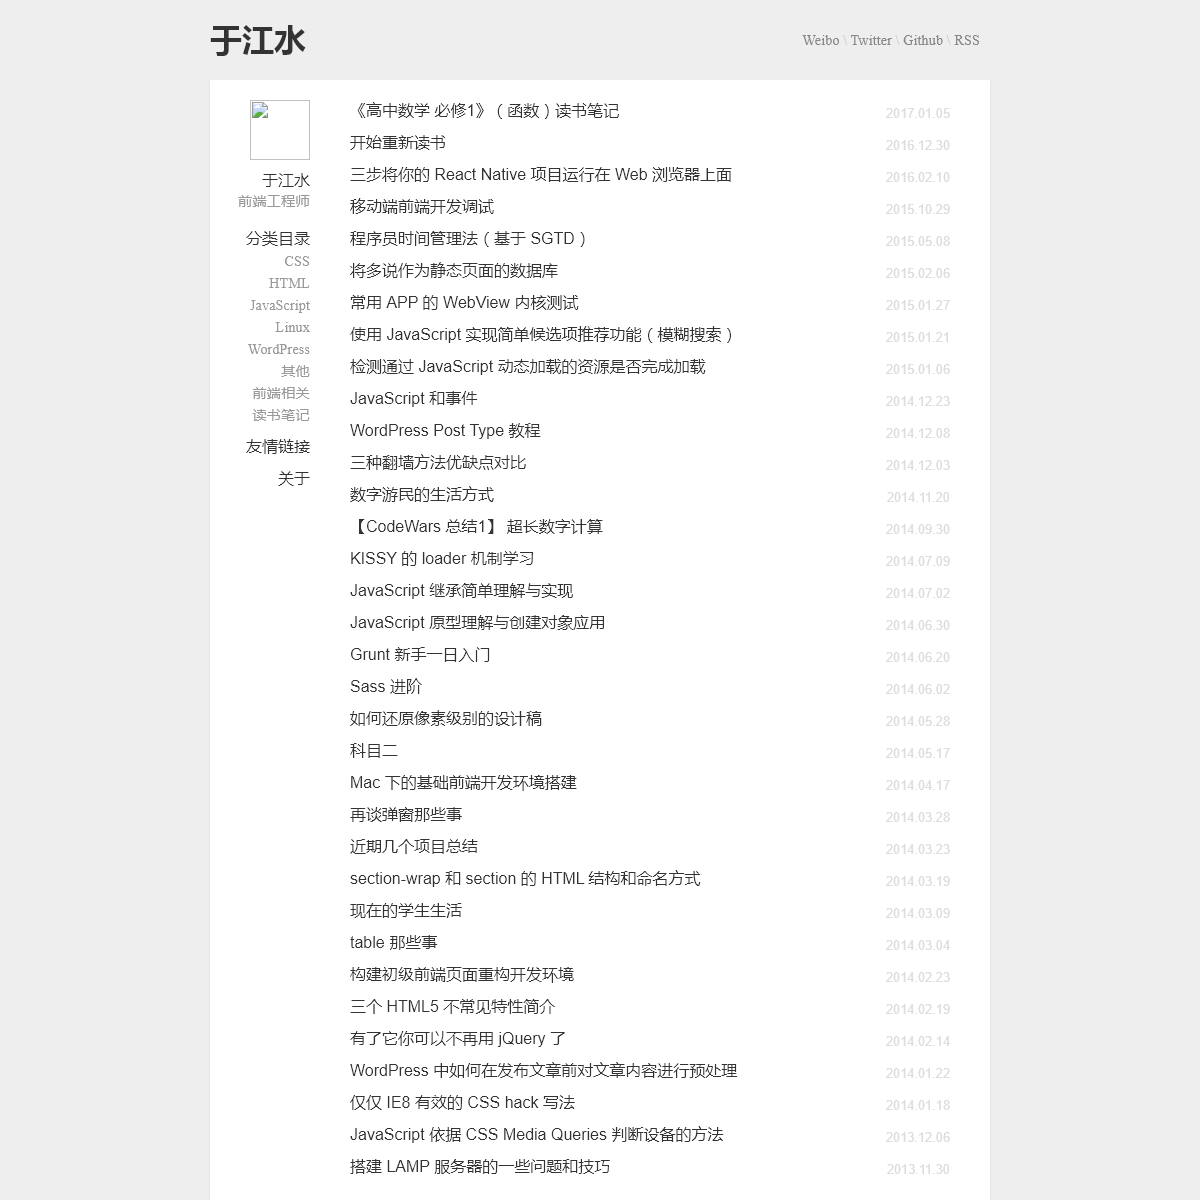 A complete backup of yujiangshui.com